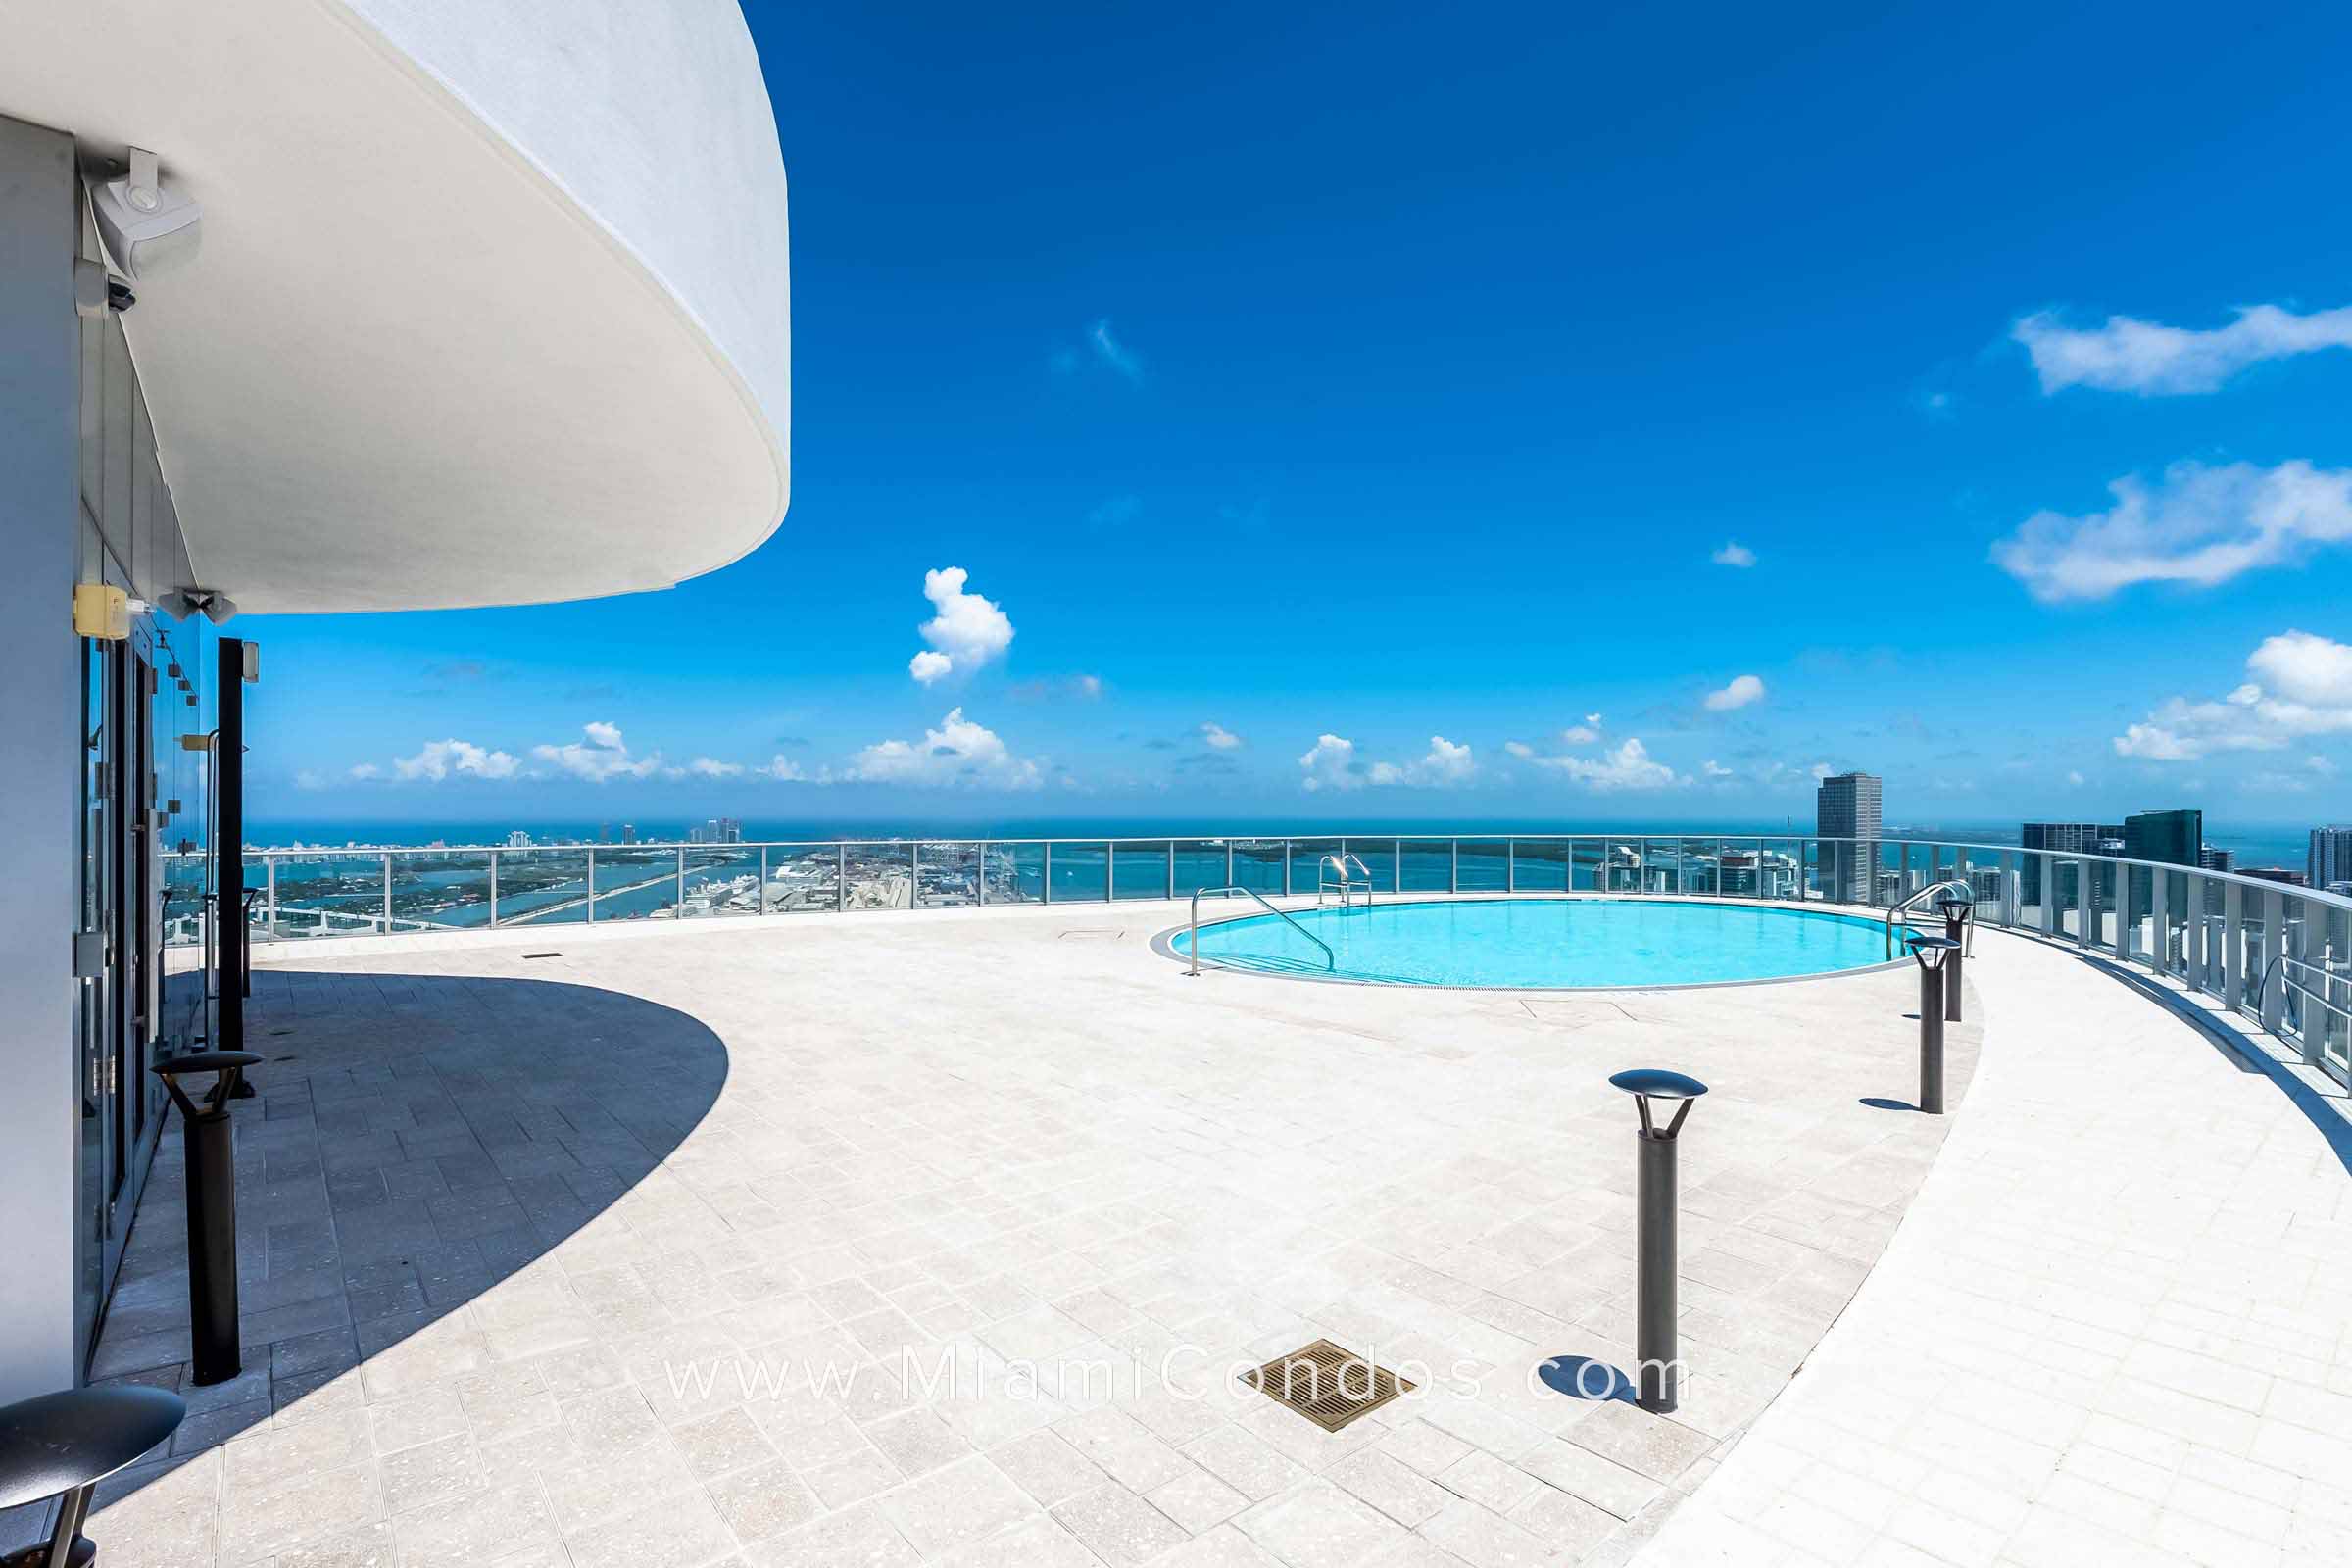 Paramount Miami Rooftop Pool Deck